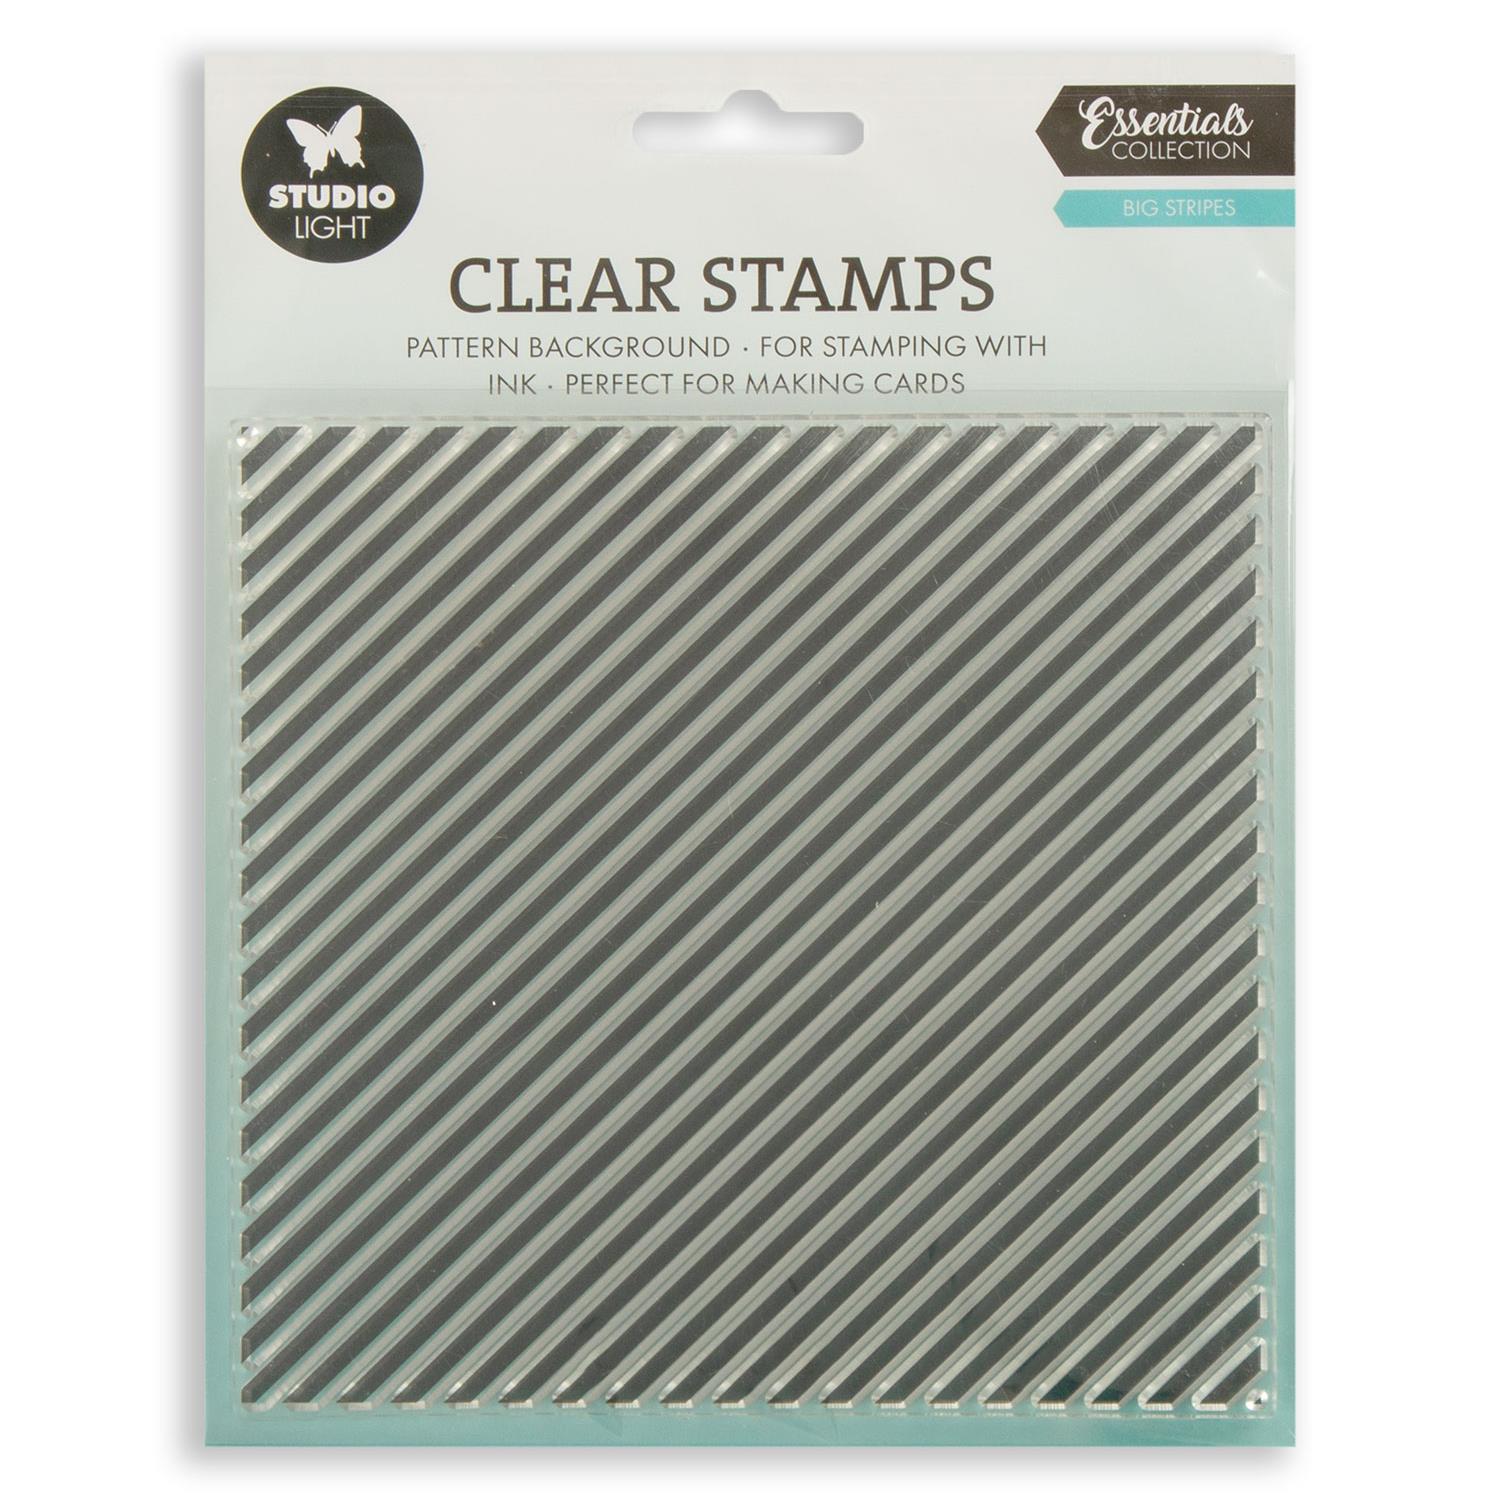 Studio Light Essentials Background Stamp Pick N Mix - Choose any 2 - Big Stripes